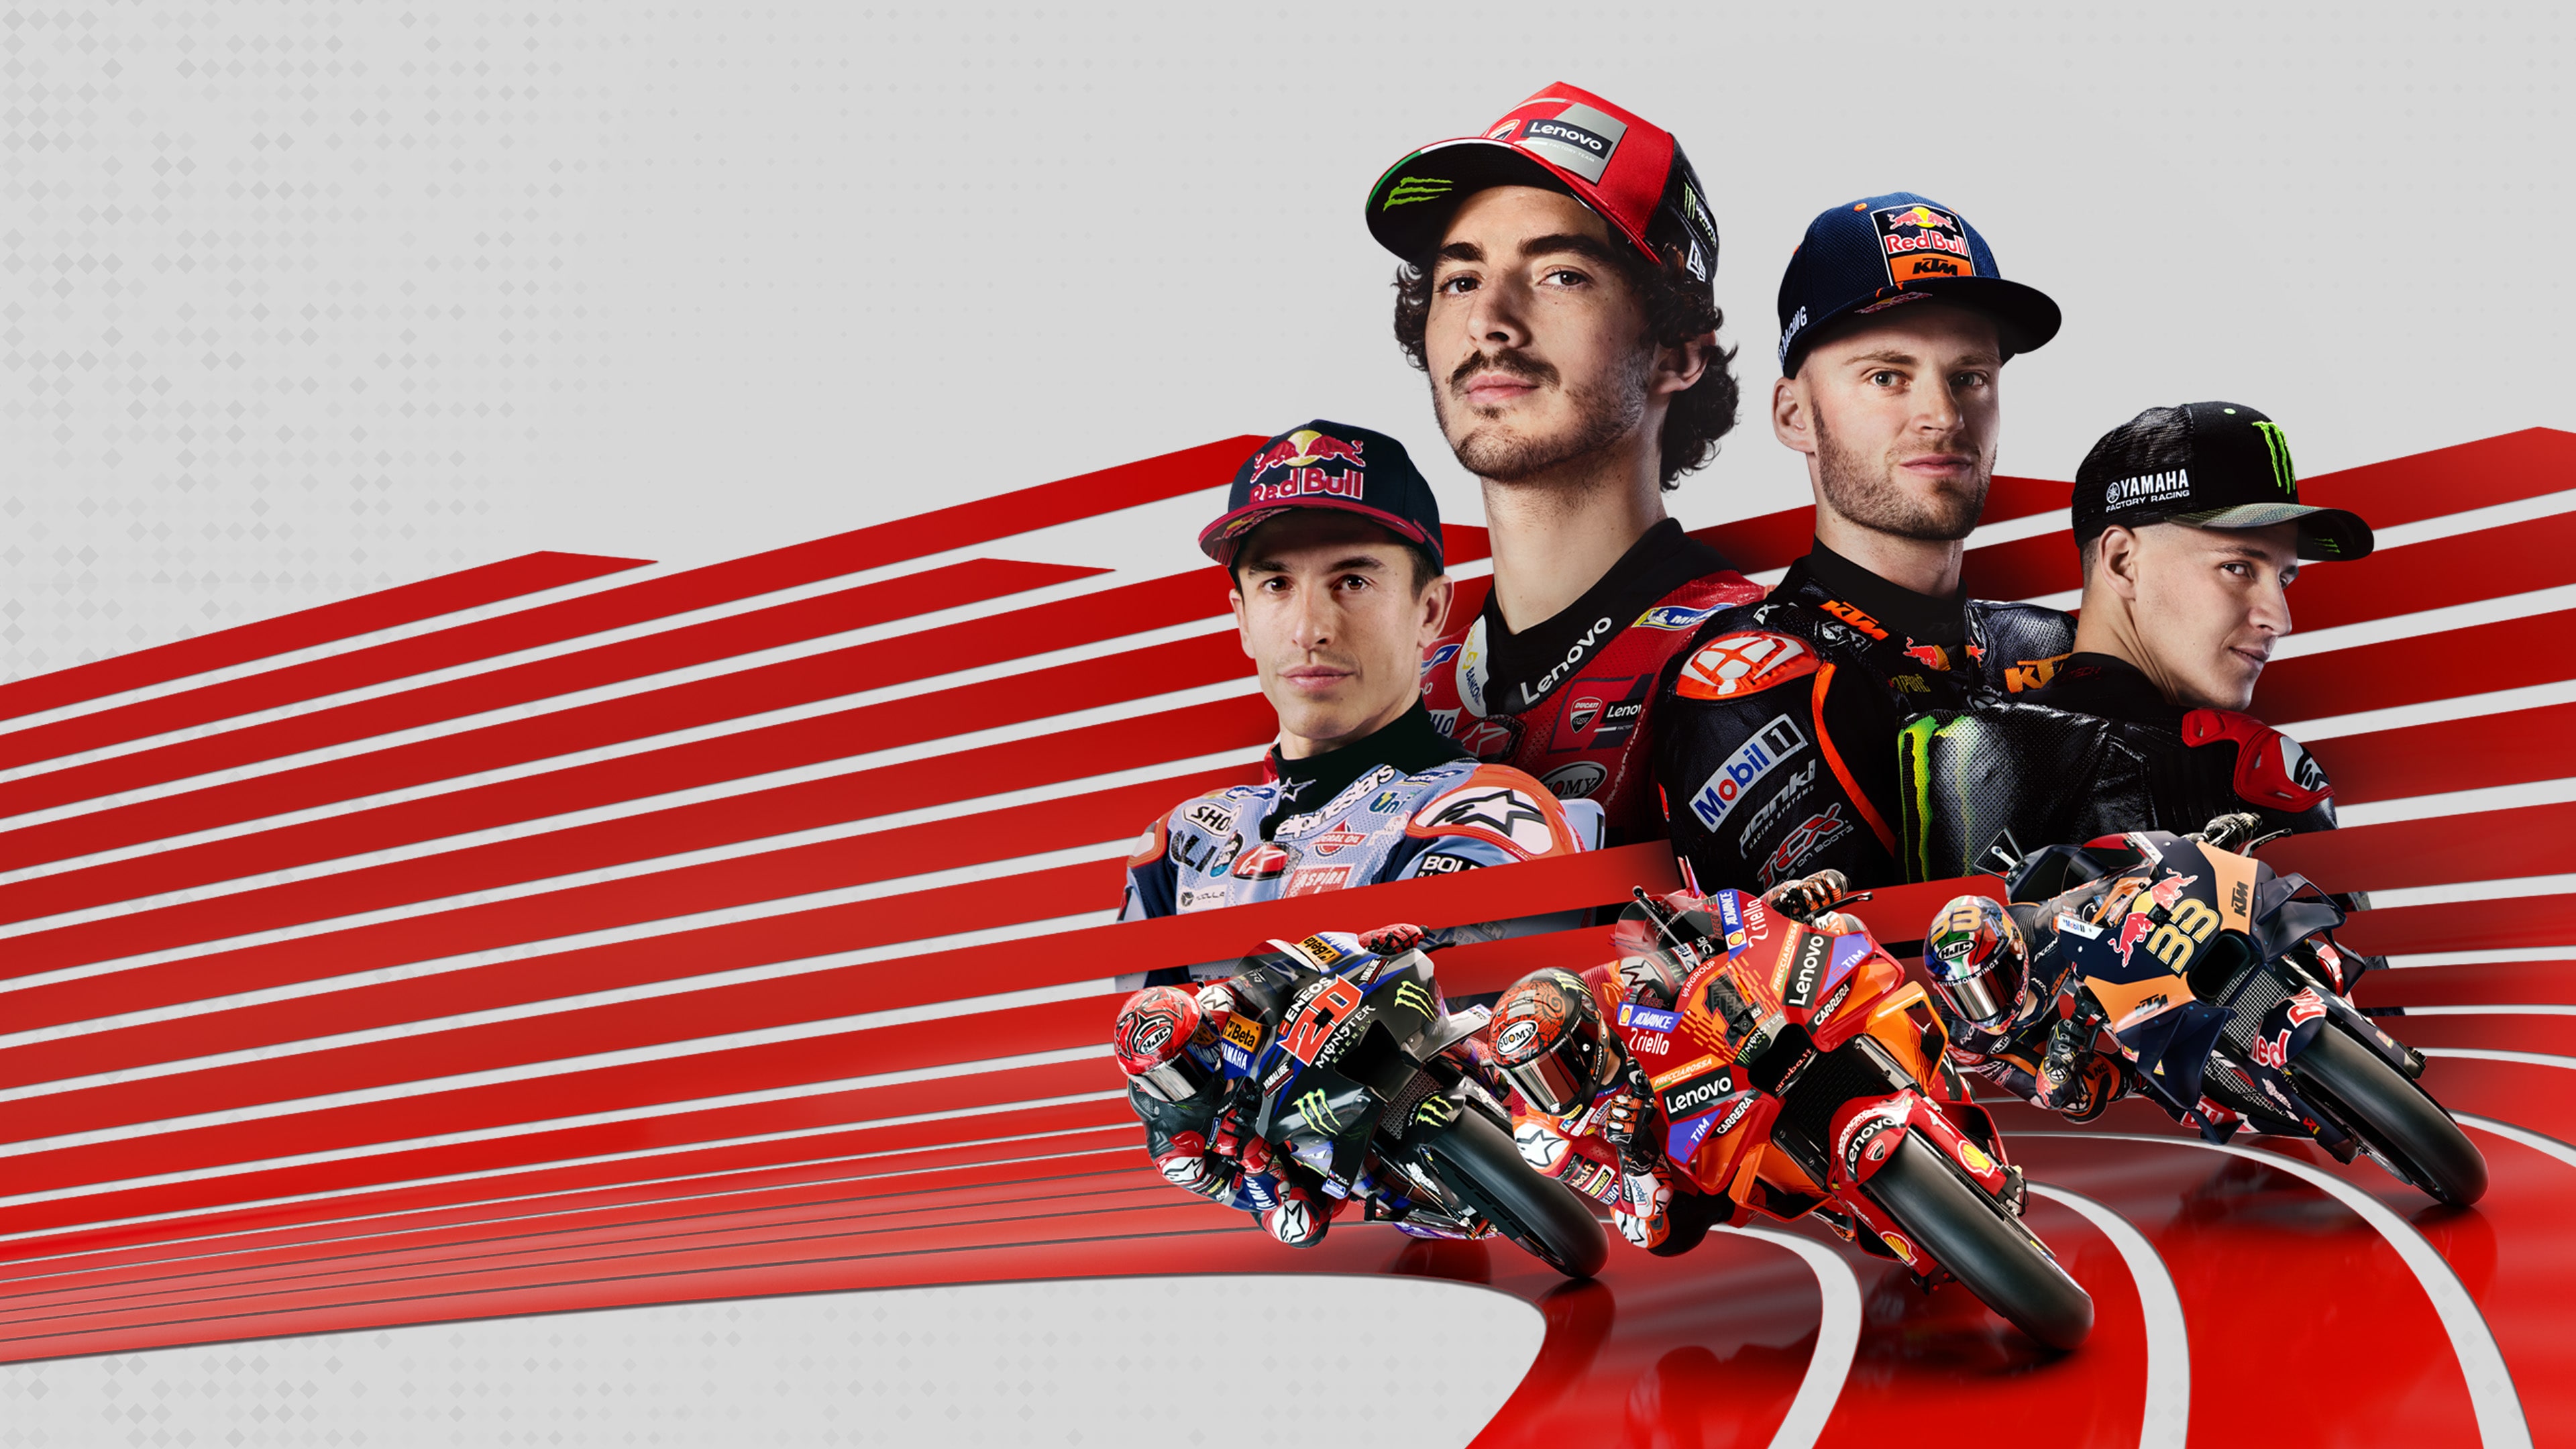 MotoGP™24 PS4 & PS5